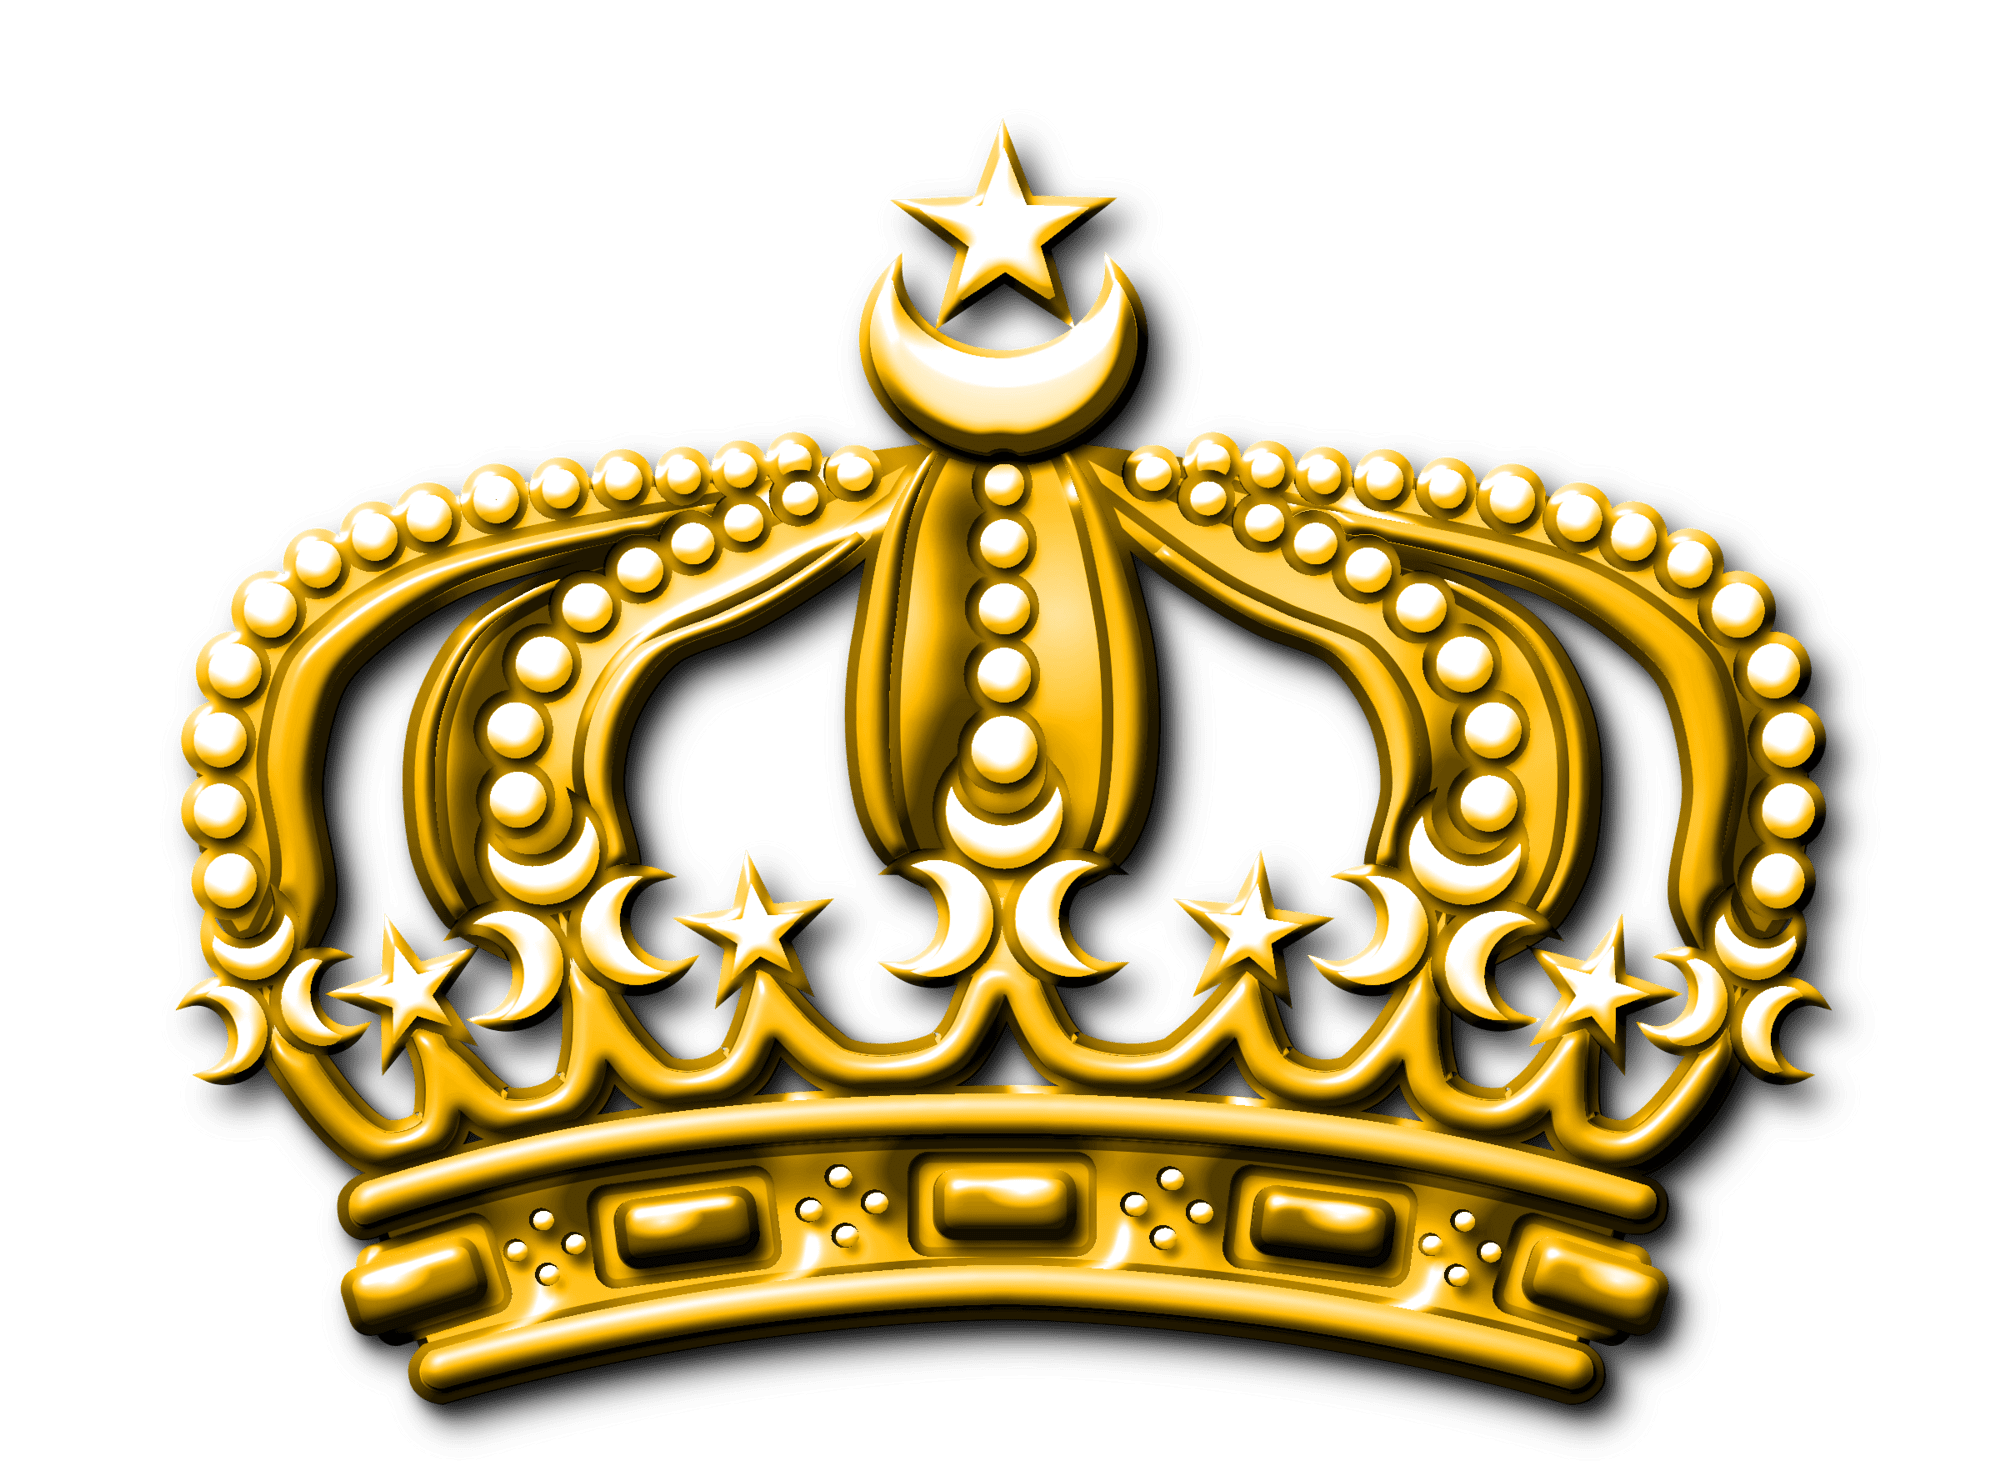 Queen crown clipart image